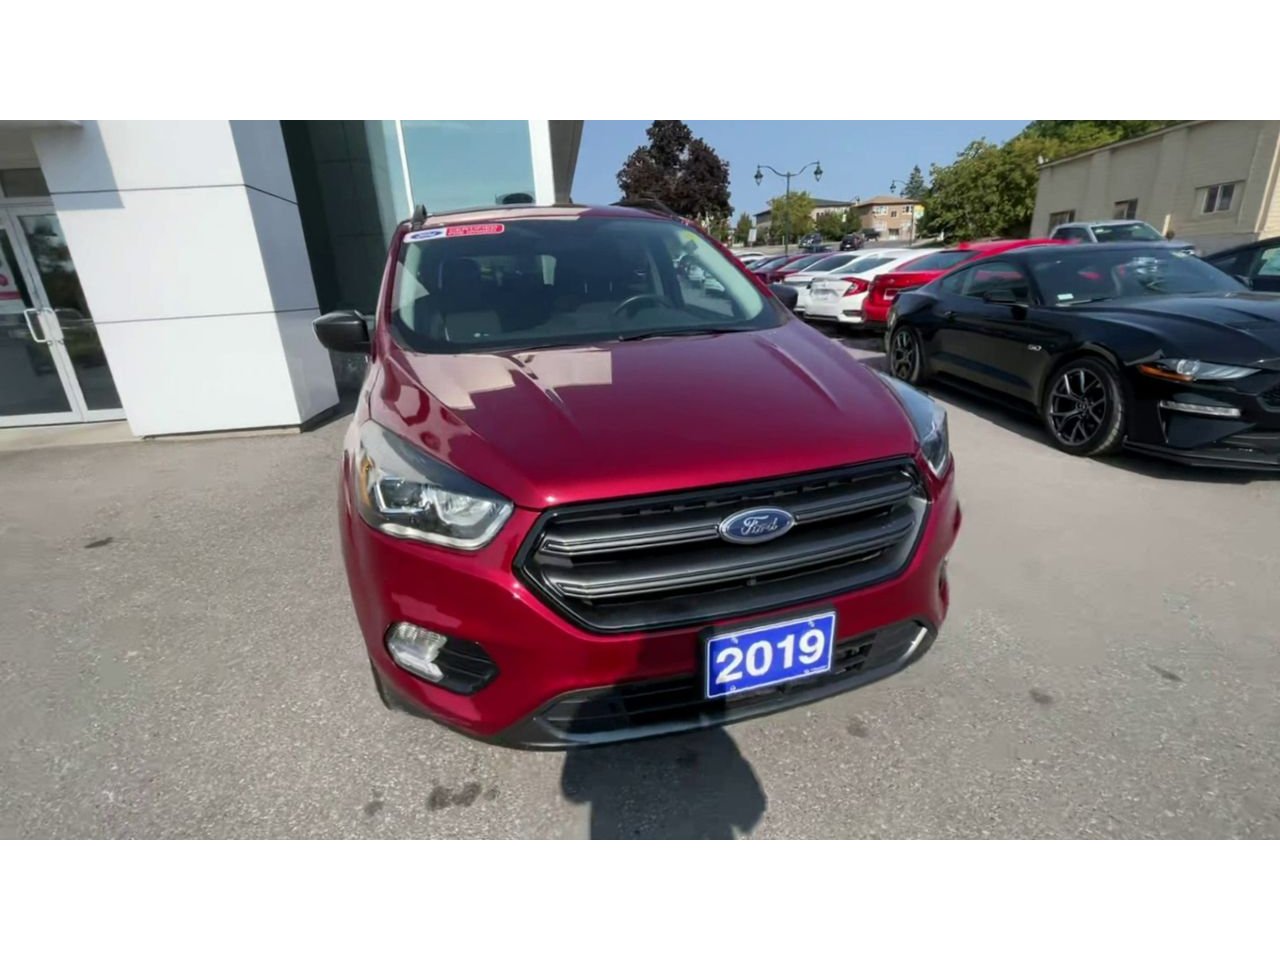 2019 Ford Escape - 21309A Full Image 3